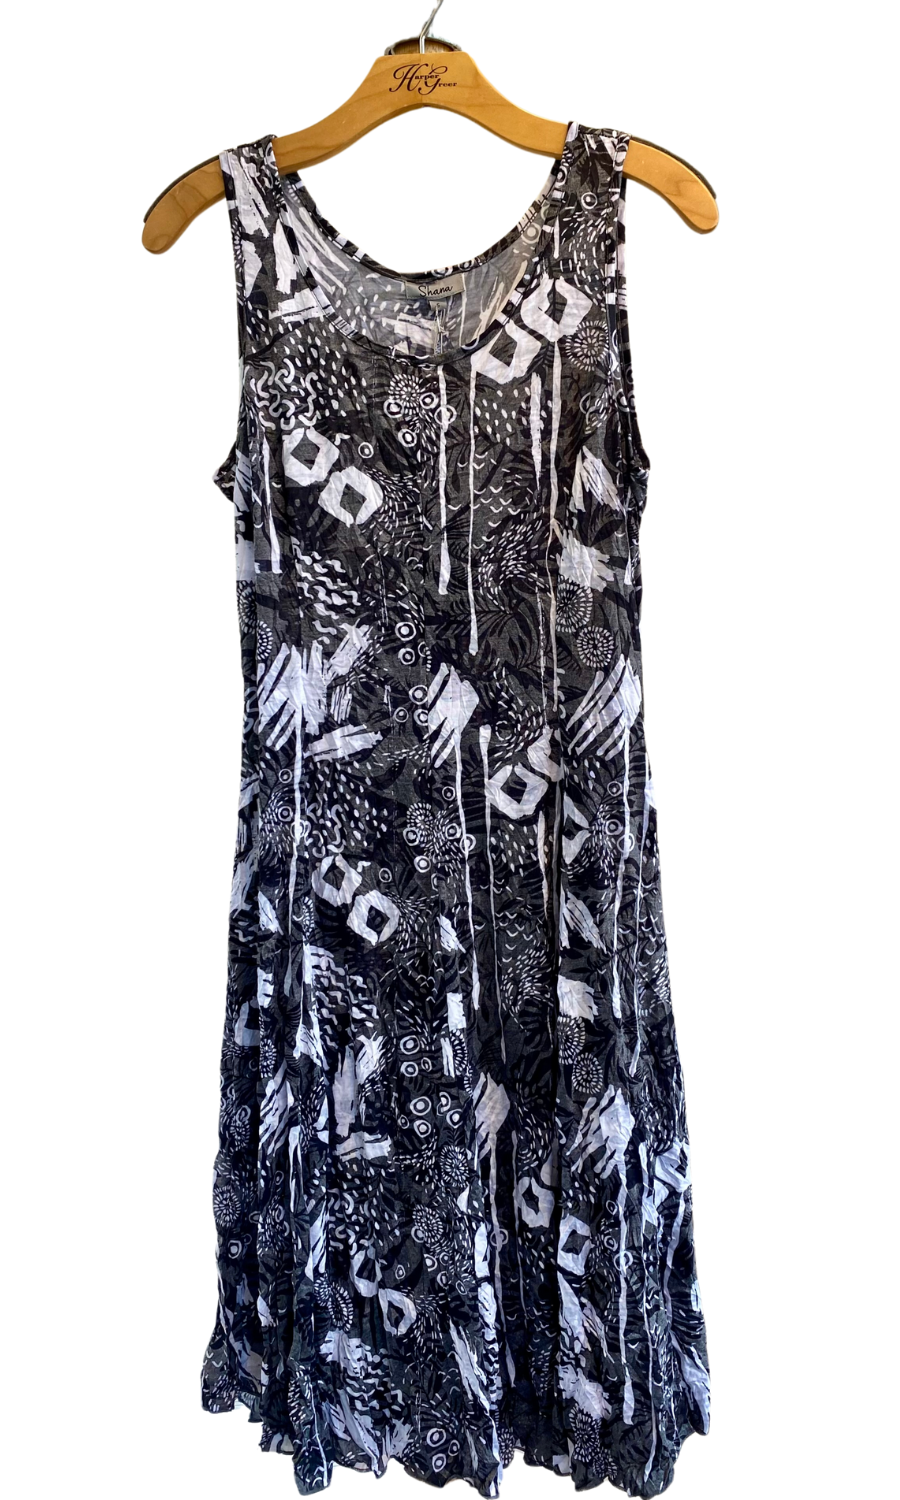 Shana Crinkled Tank Dress in Blk/Wh Print